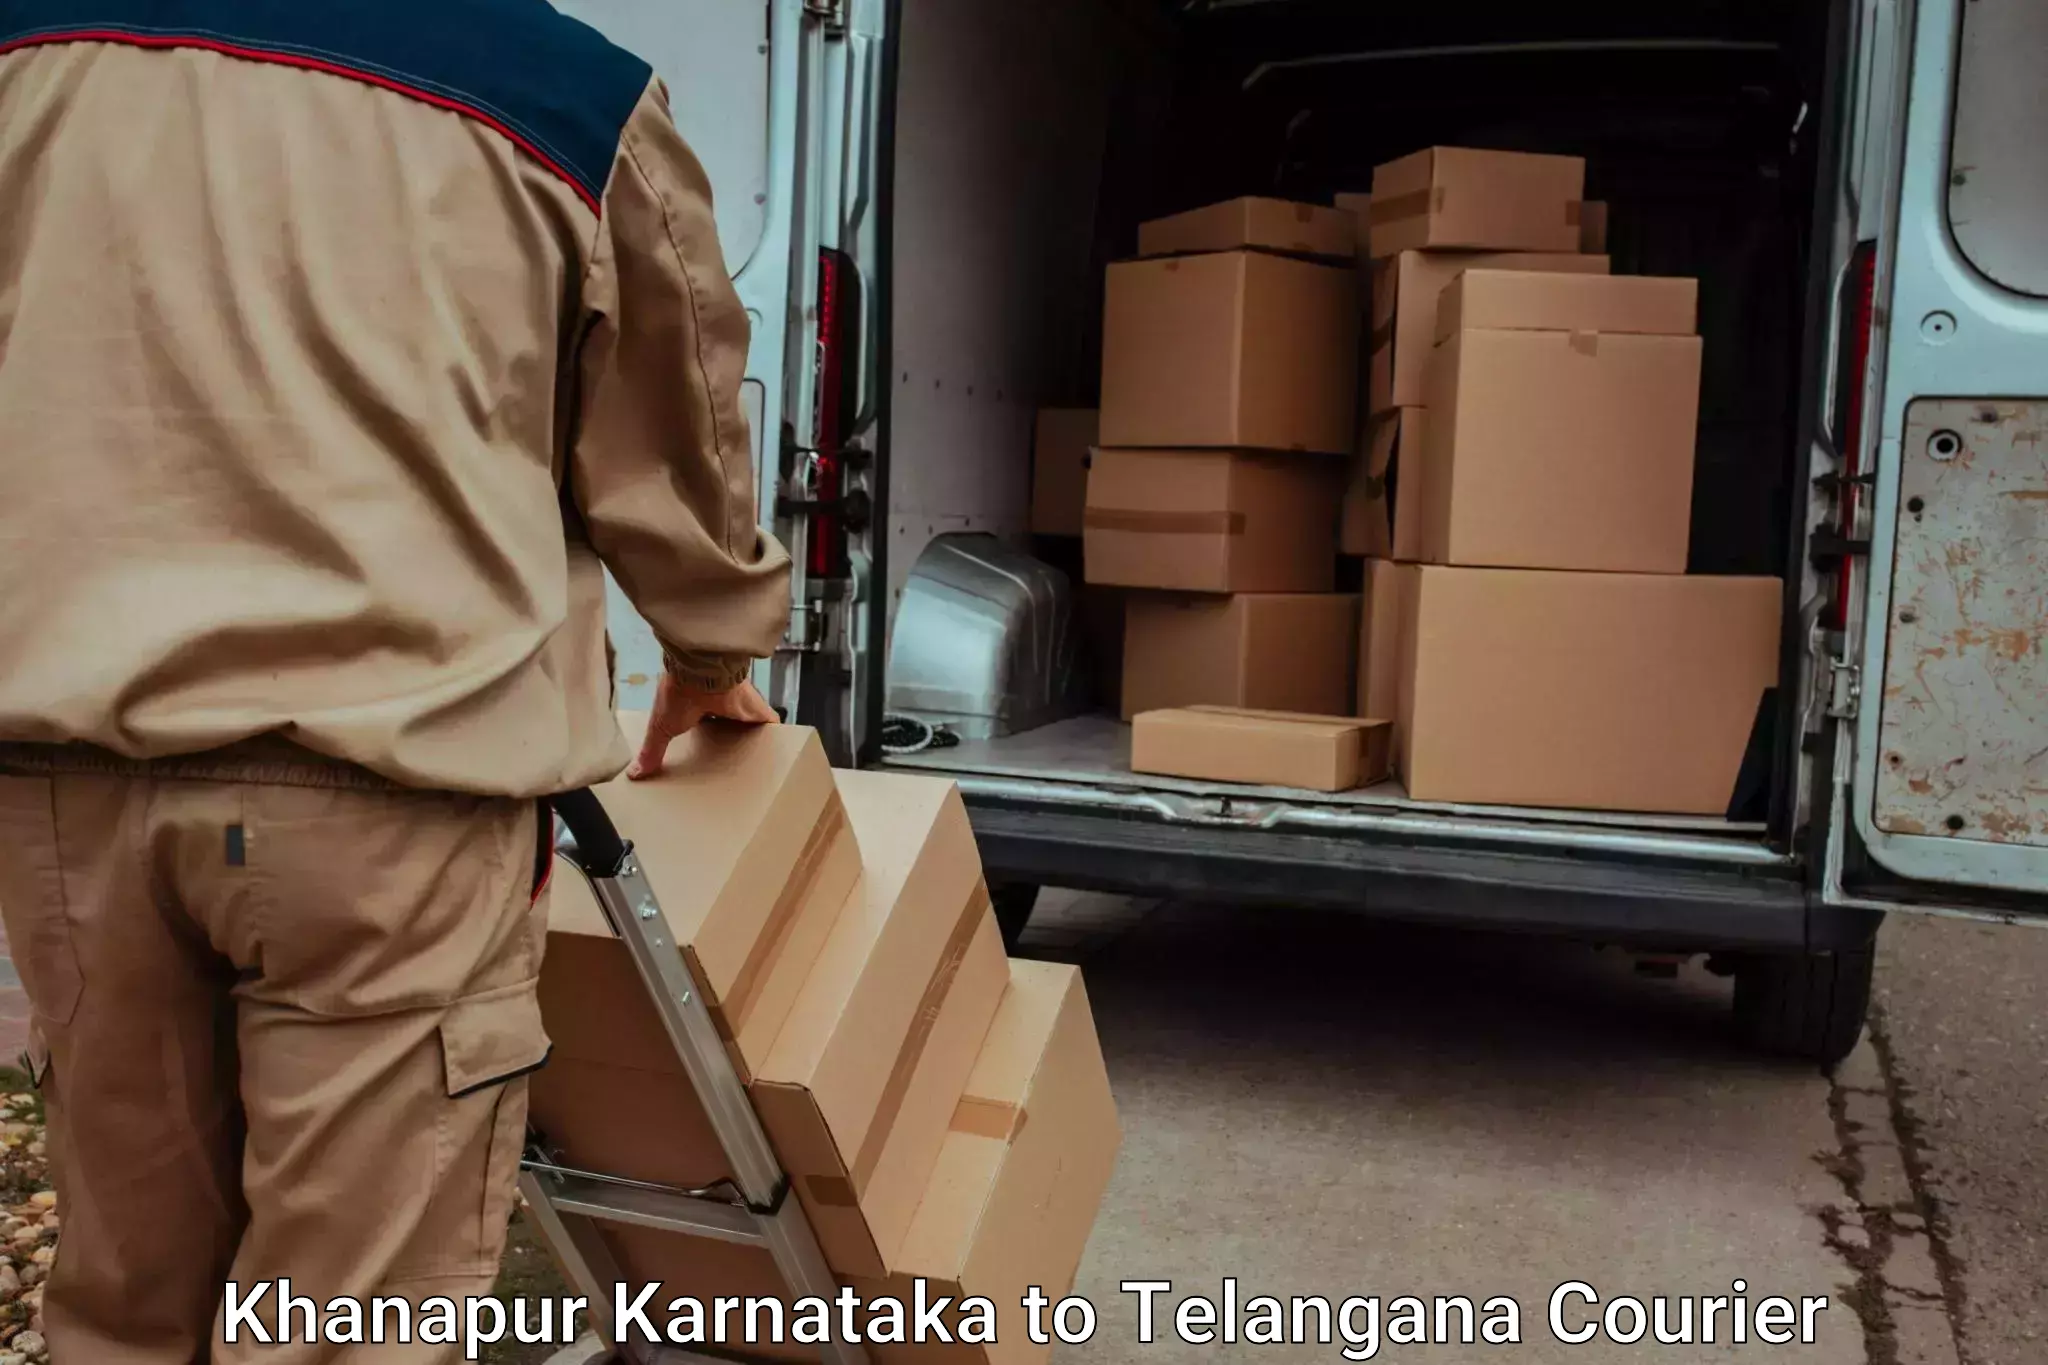 Baggage relocation service Khanapur Karnataka to Allapalli